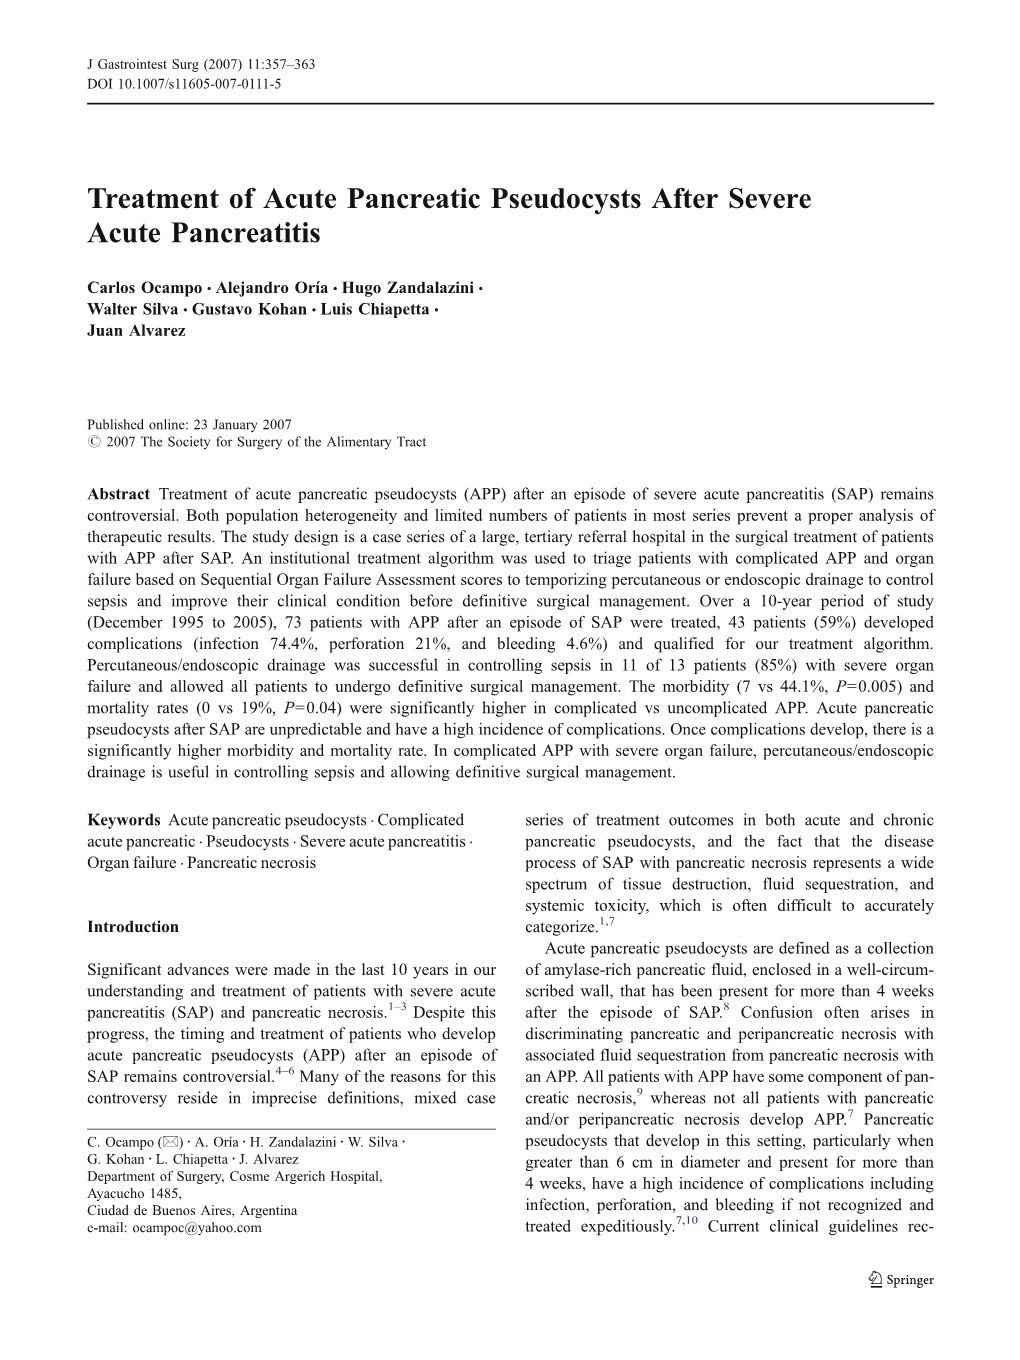 Treatment of Acute Pancreatic Pseudocysts After Severe Acute Pancreatitis